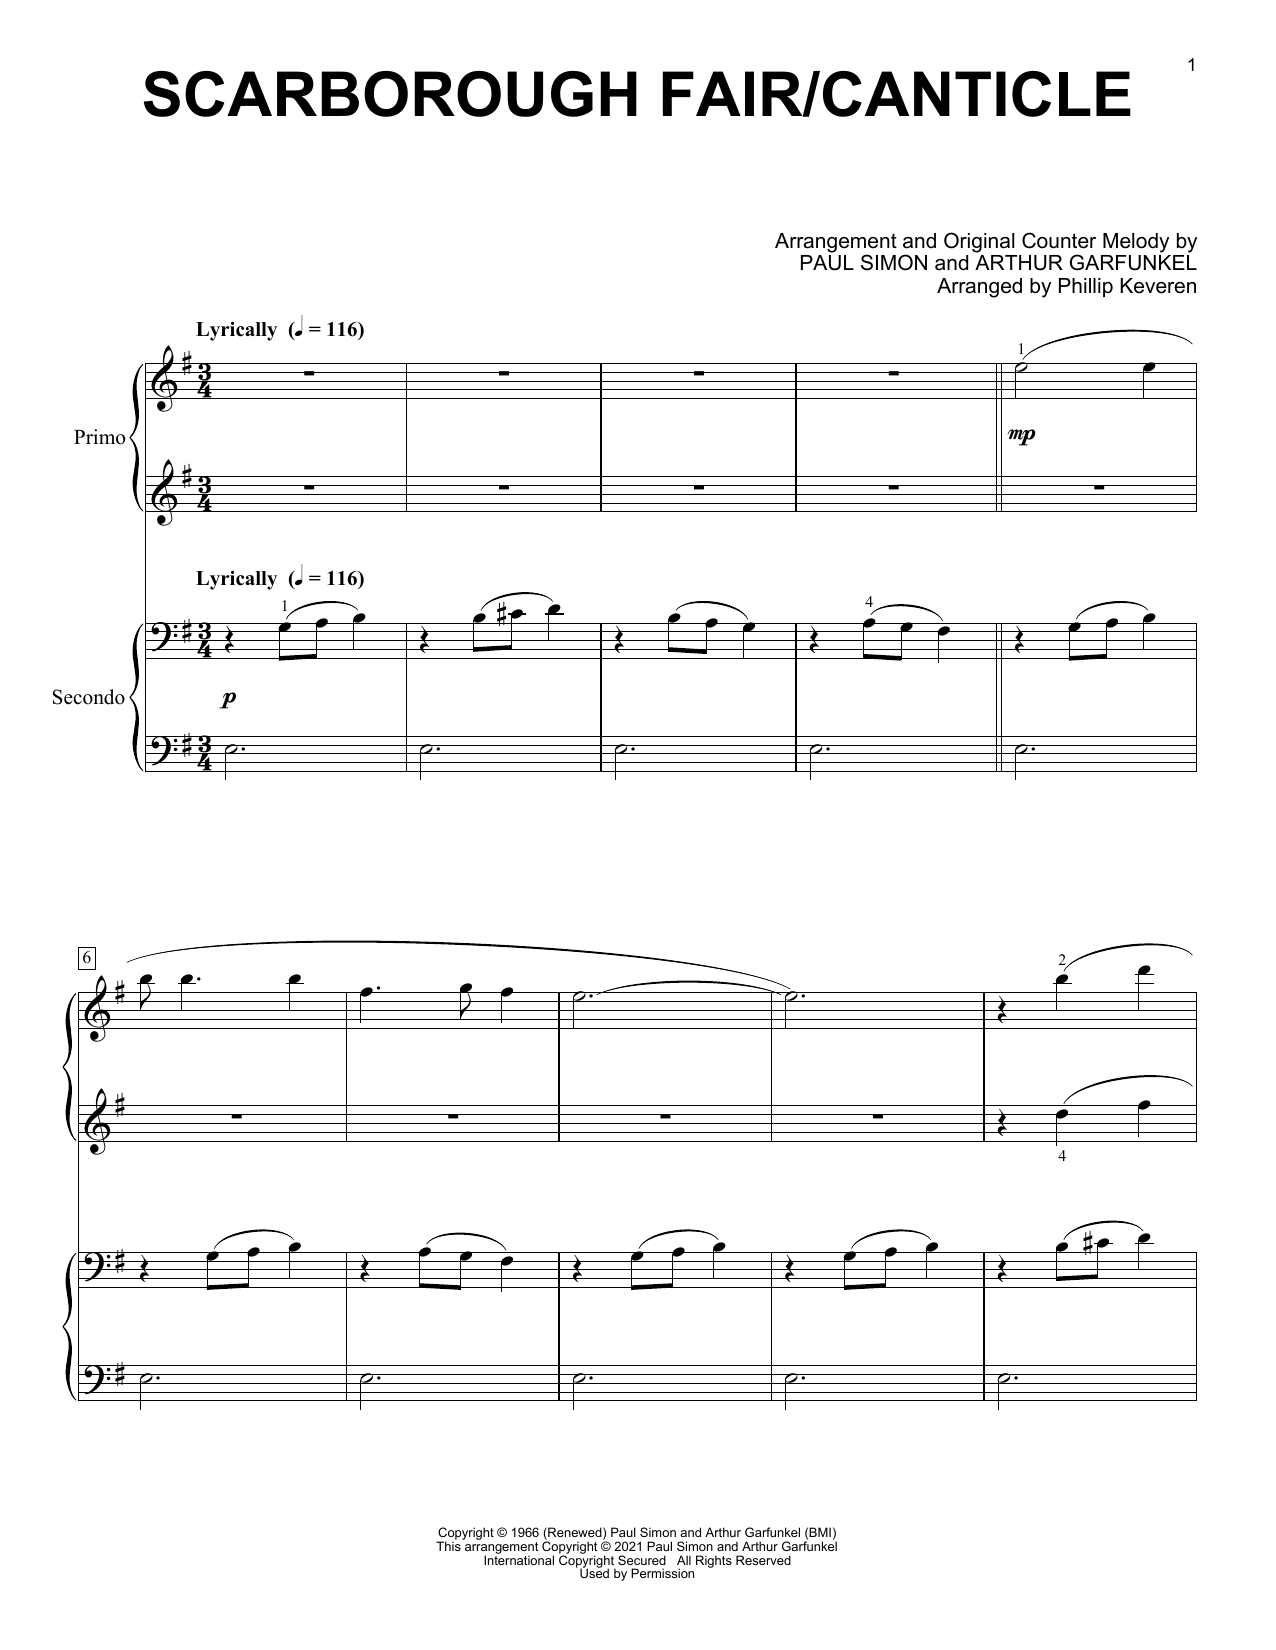 Simon & Garfunkel Scarborough Fair/Canticle (arr. Phillip Keveren) Sheet Music Notes & Chords for Piano Duet - Download or Print PDF